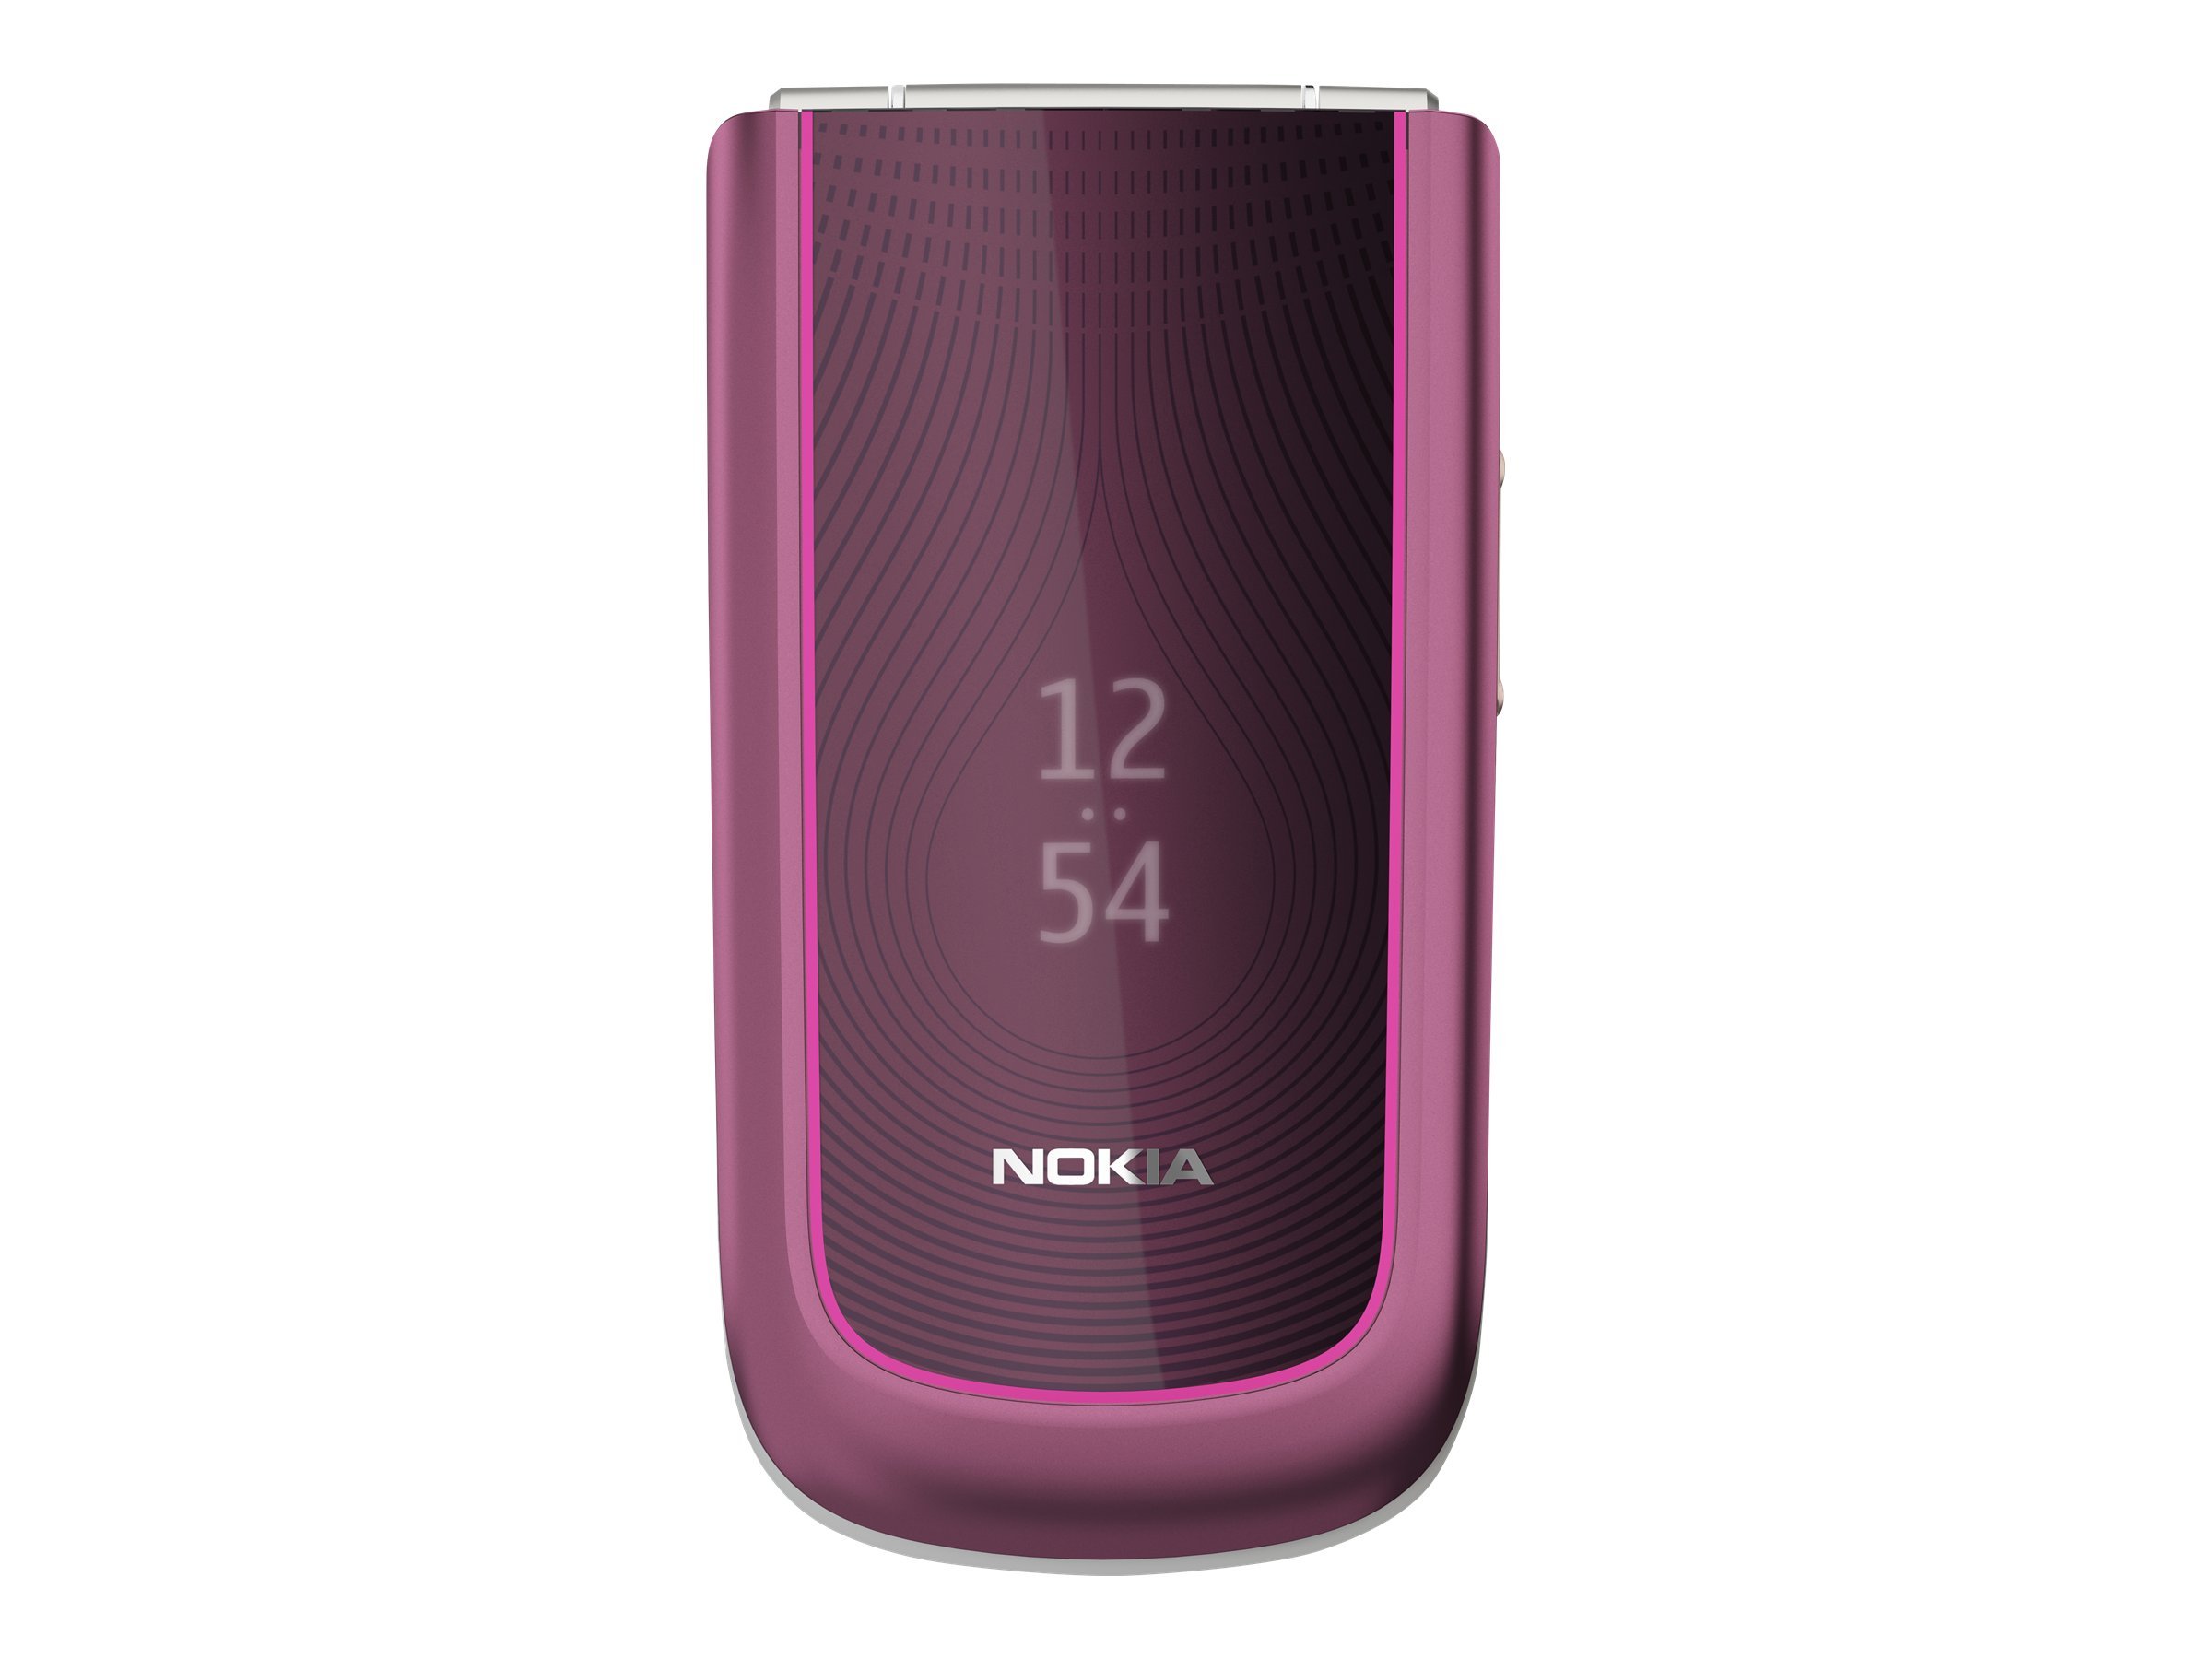 Nokia 2720 Flip - Specifications